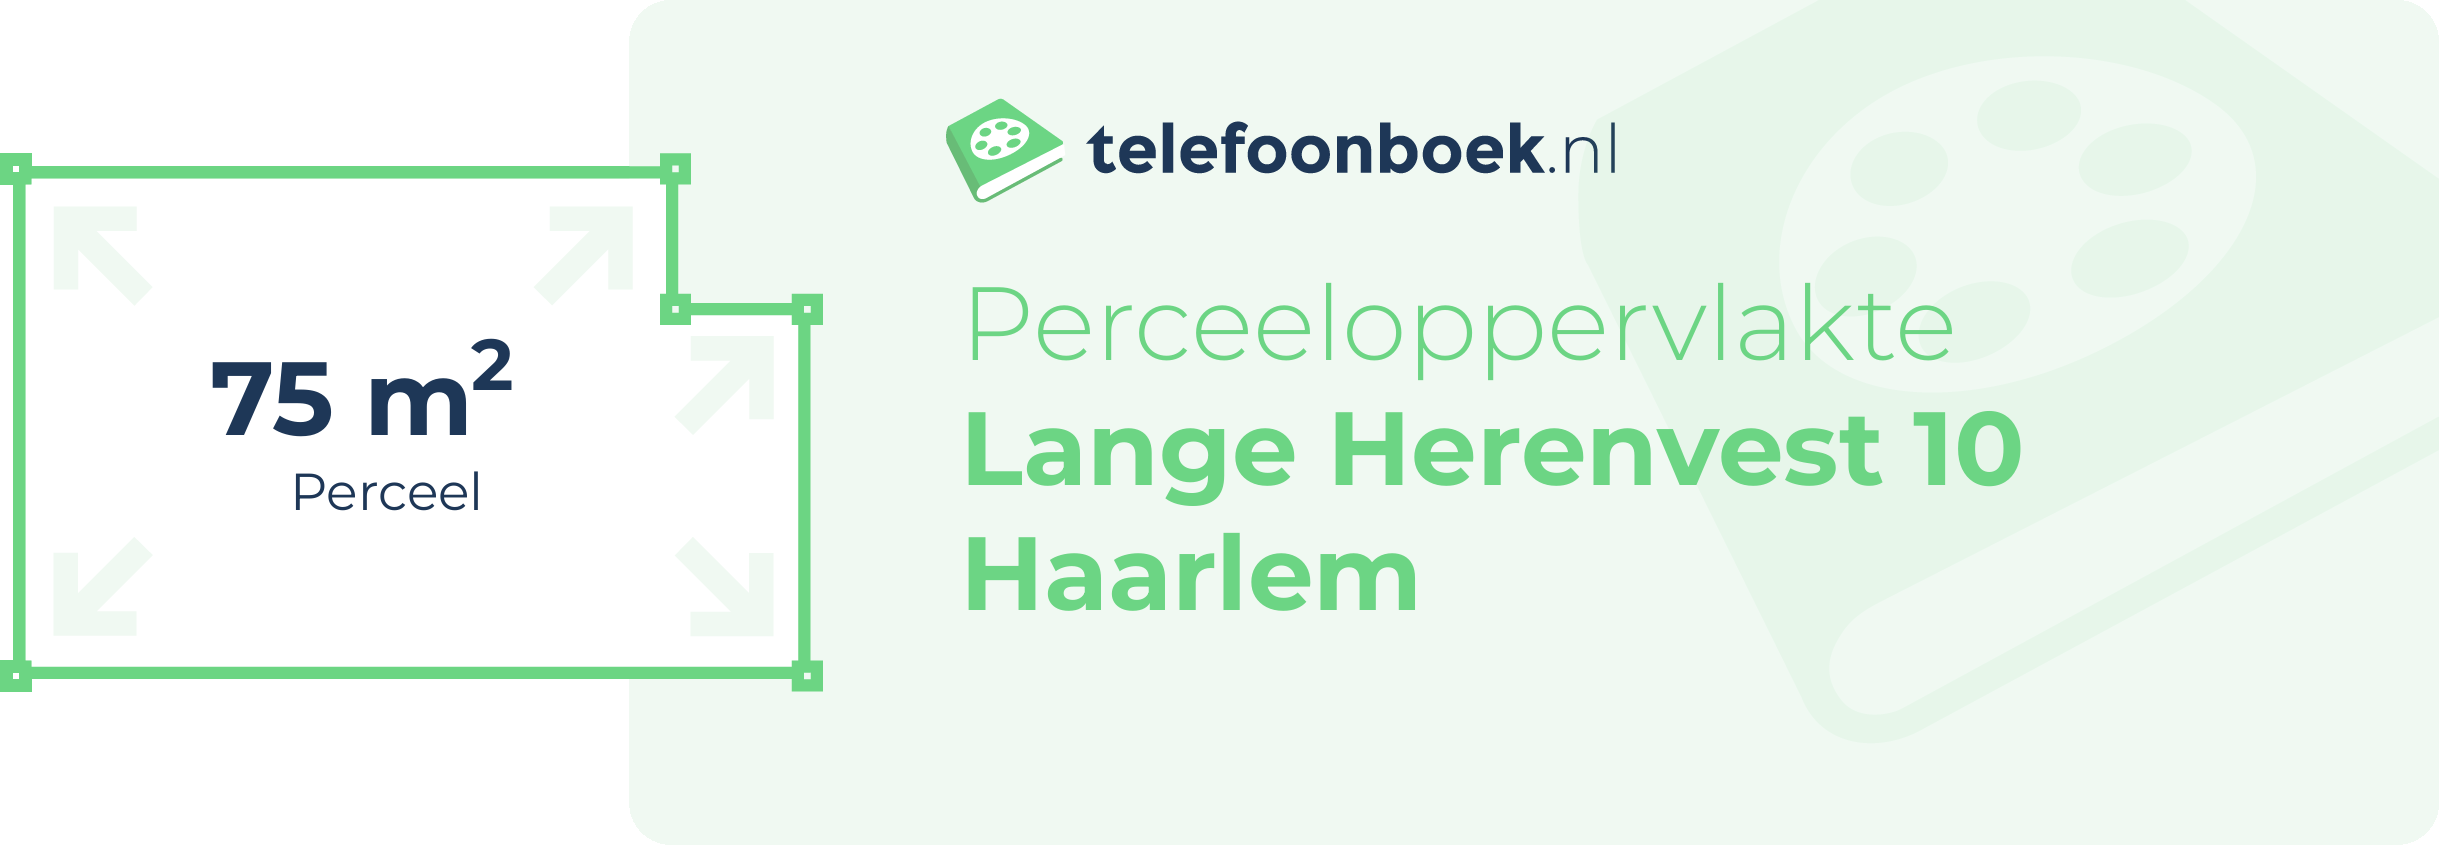 Perceeloppervlakte Lange Herenvest 10 Haarlem